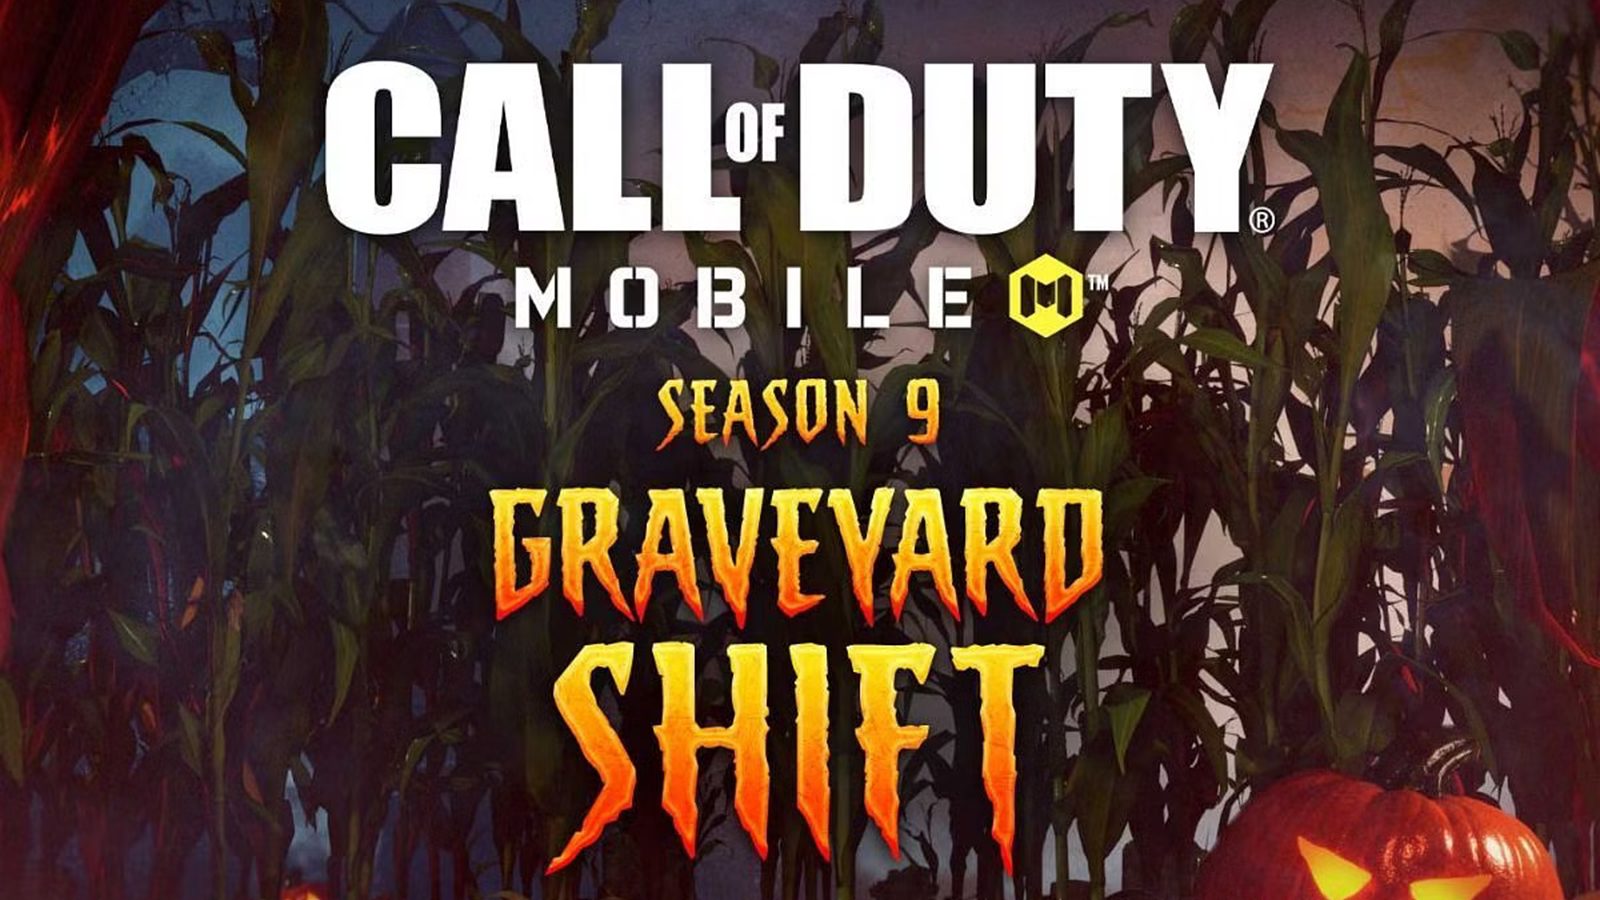 COD Mobile Season 9 - Graveyard Shift